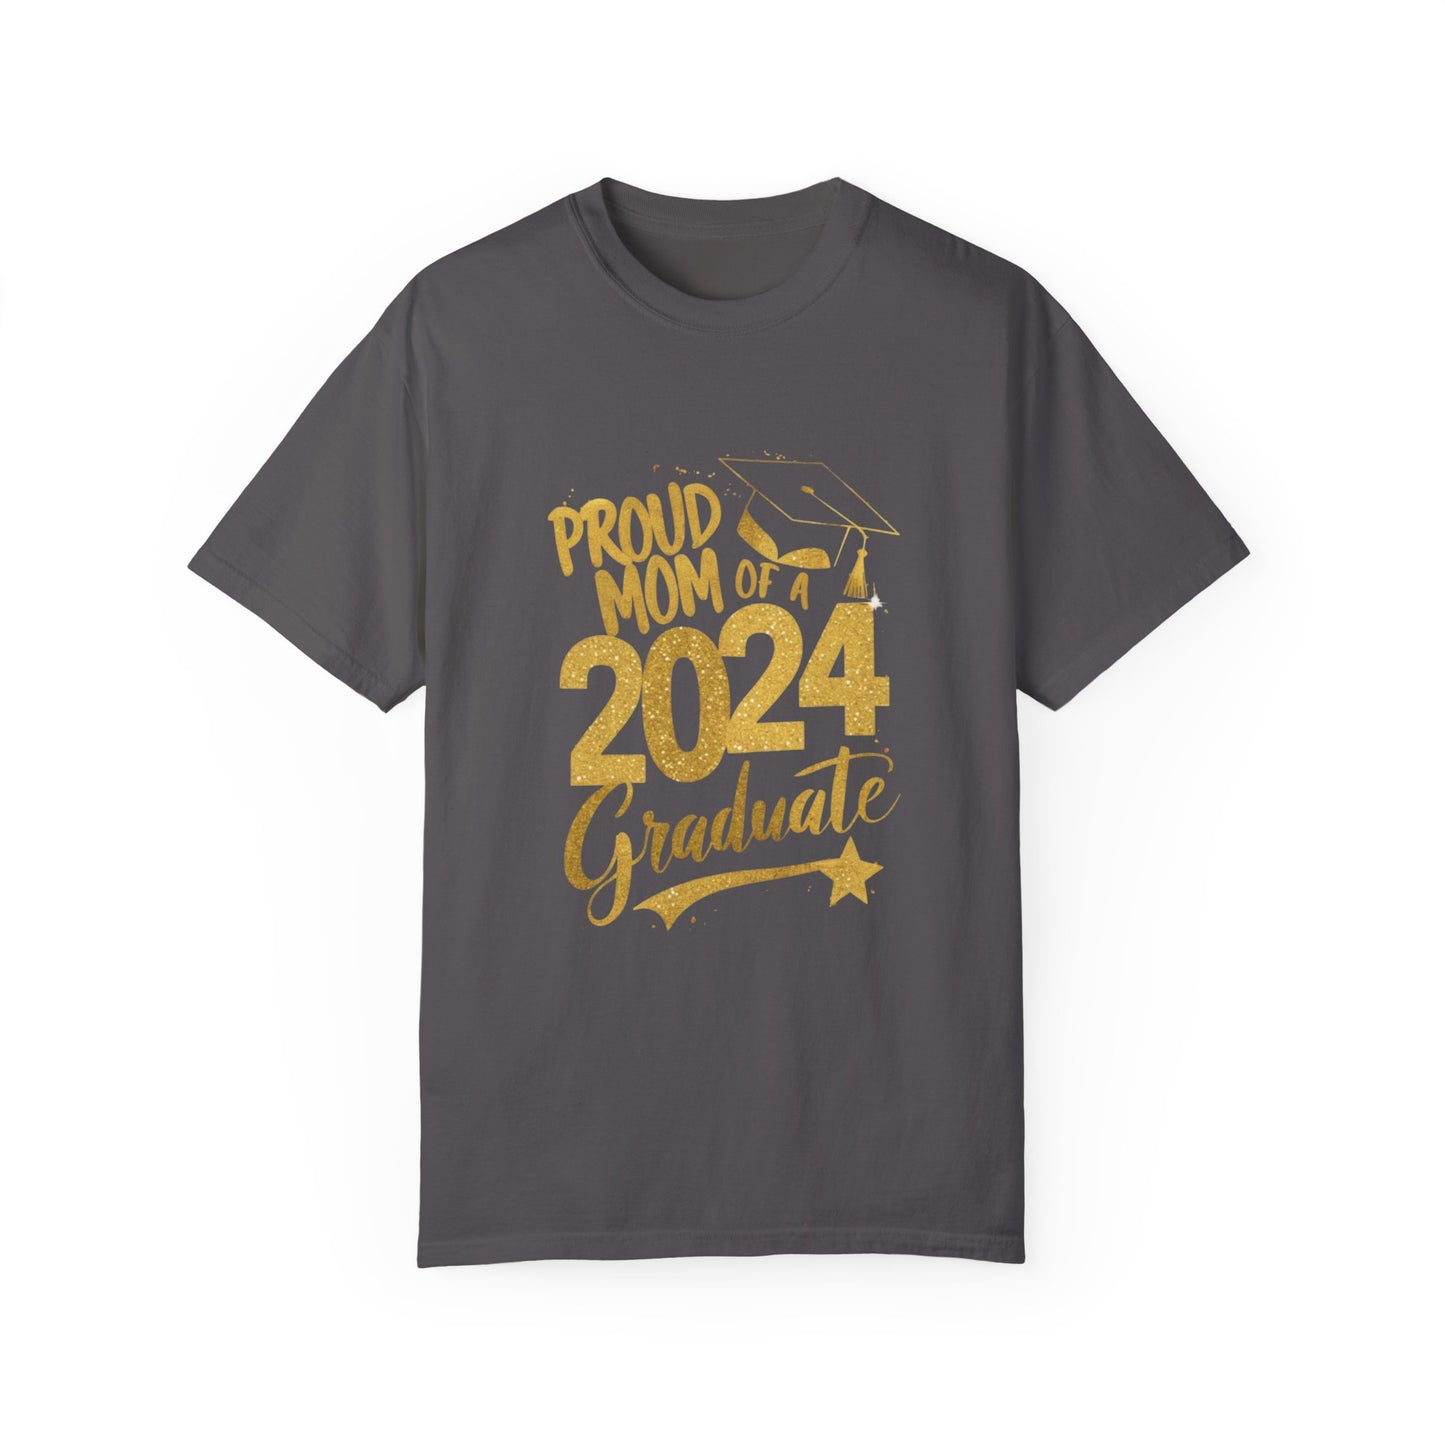 Proud of Mom 2024 Graduate Unisex Garment-dyed T-shirt Cotton Funny Humorous Graphic Soft Premium Unisex Men Women Graphite T-shirt Birthday Gift-8